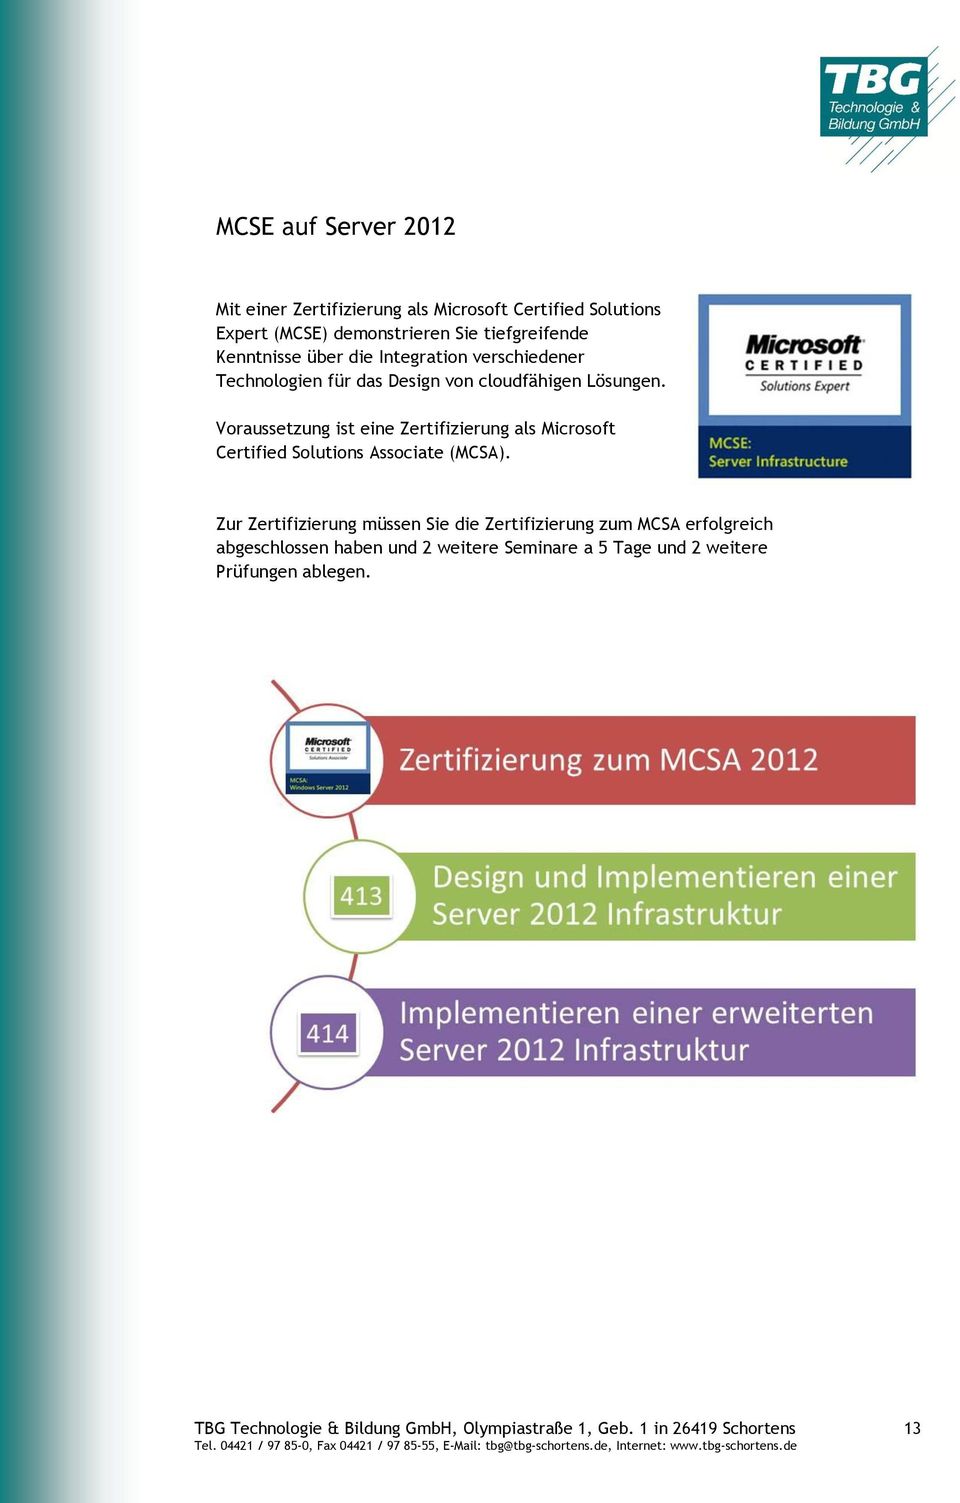 Voraussetzung ist eine Zertifizierung als Microsoft Certified Solutions Associate (MCSA).